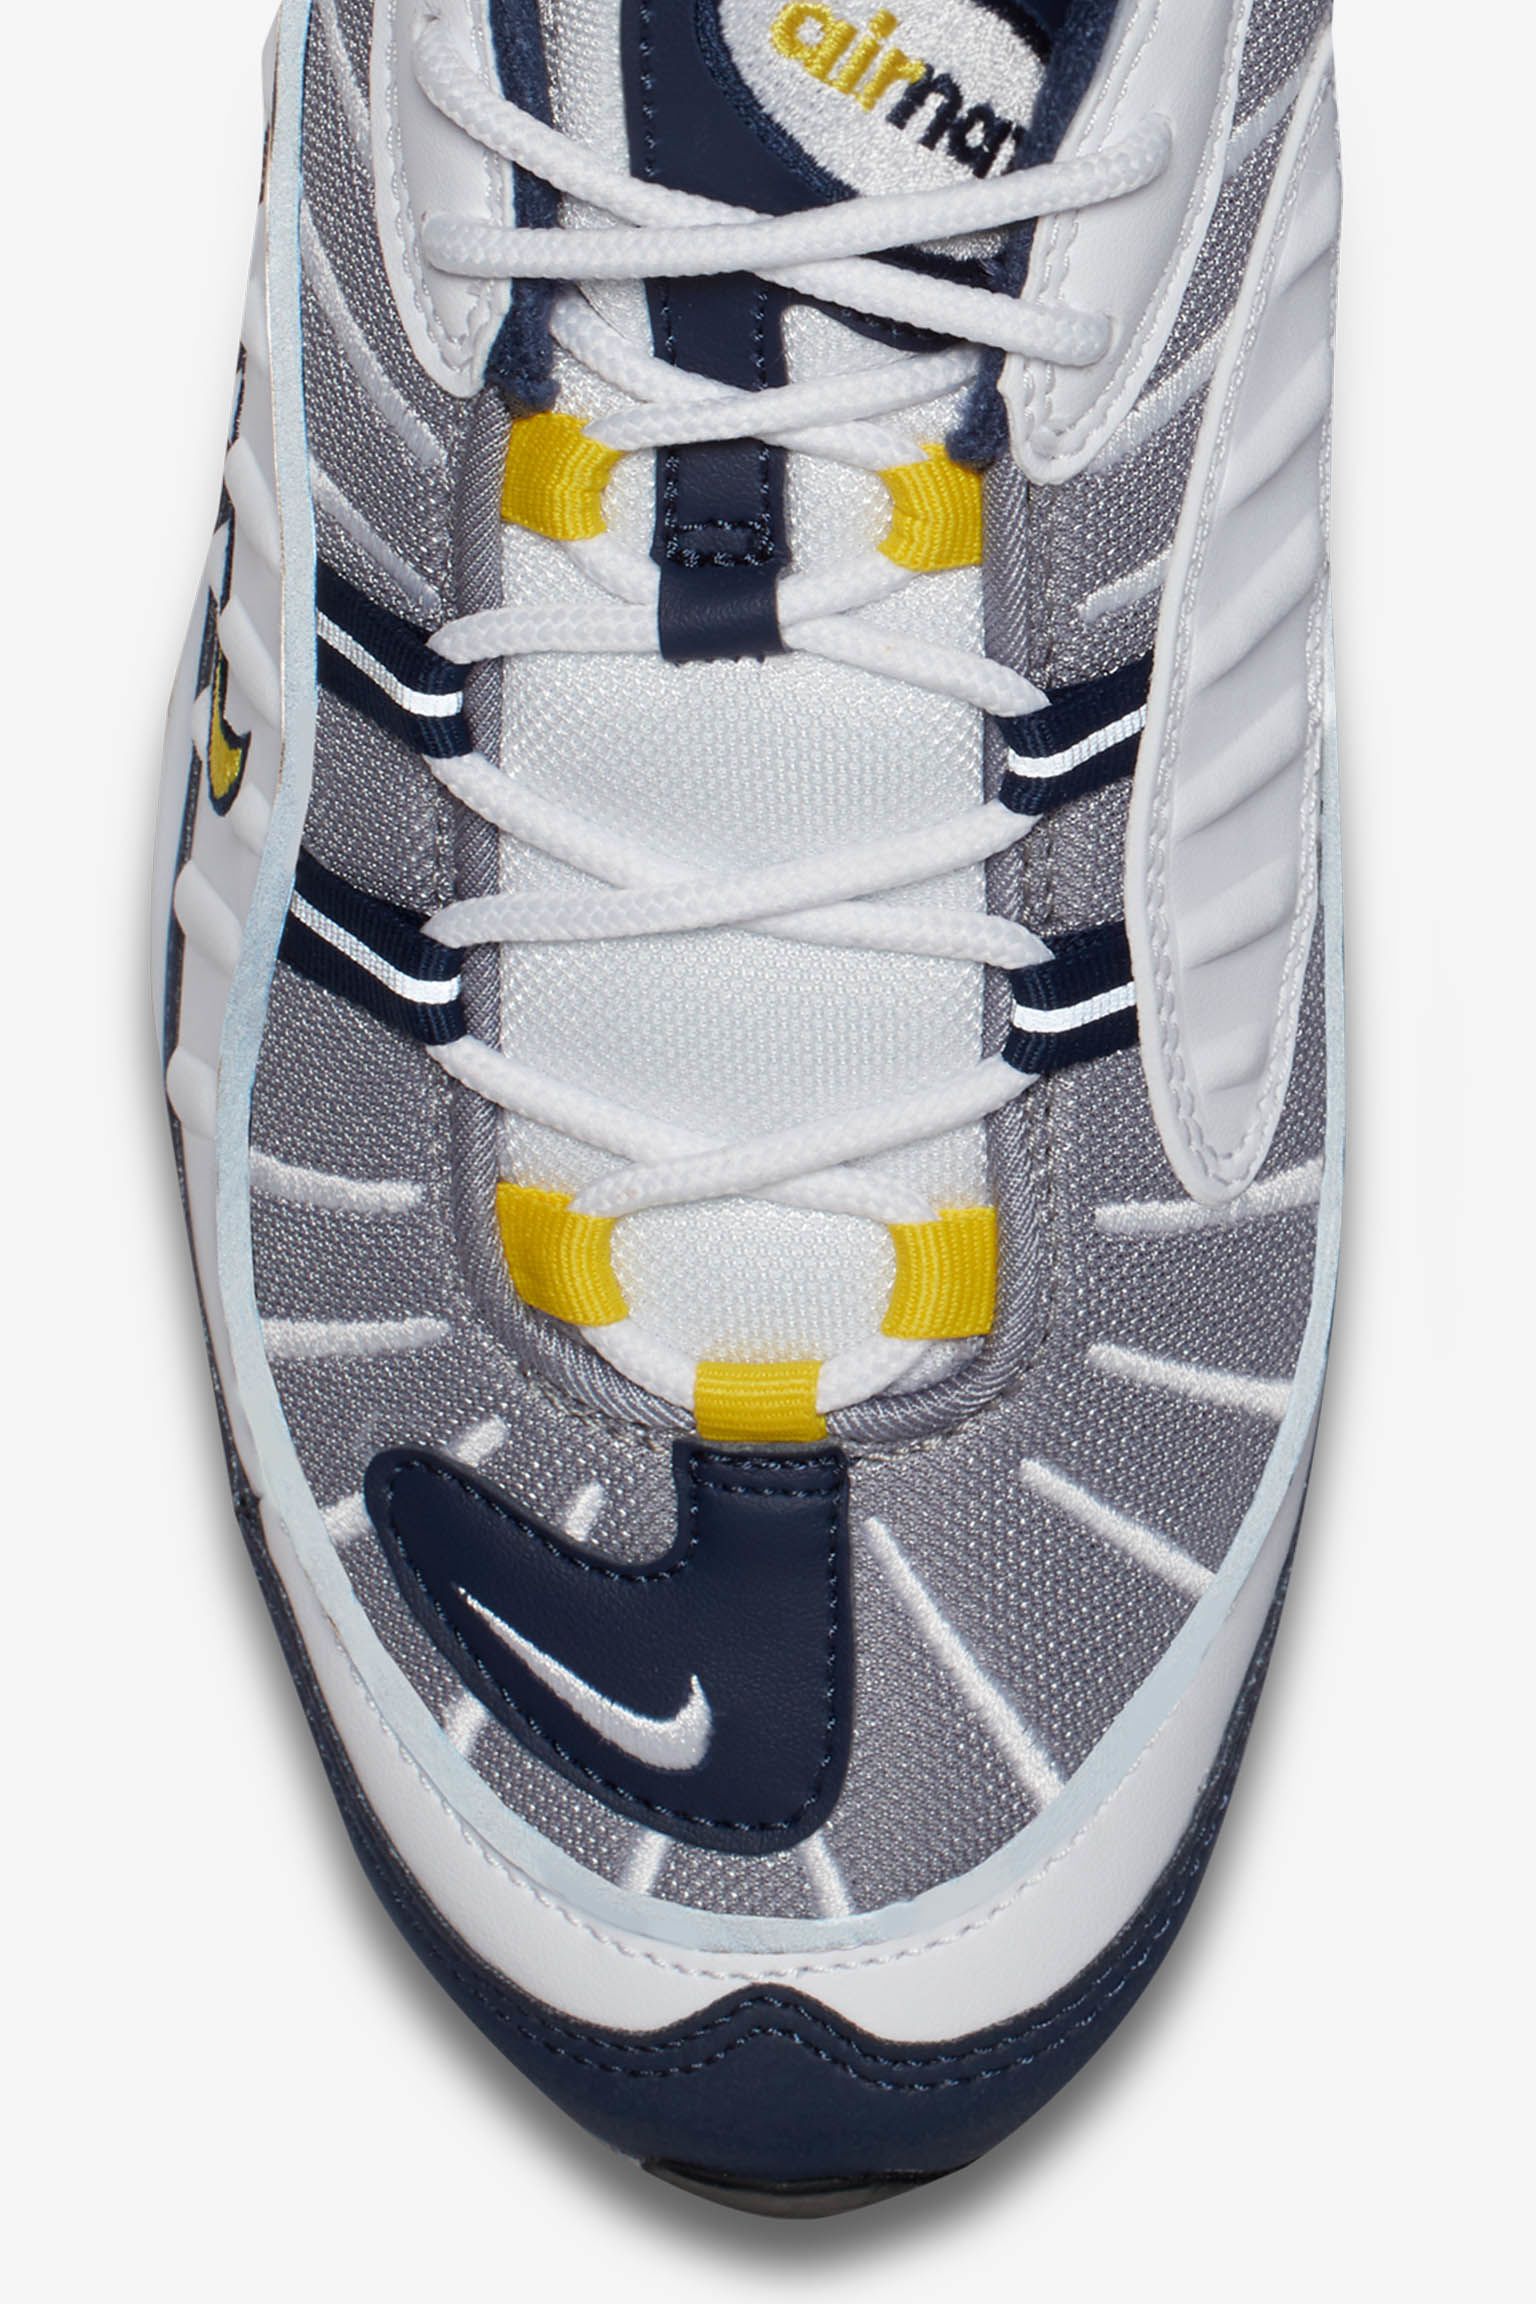 Nike Air Max 98 Tour Yellow Grey